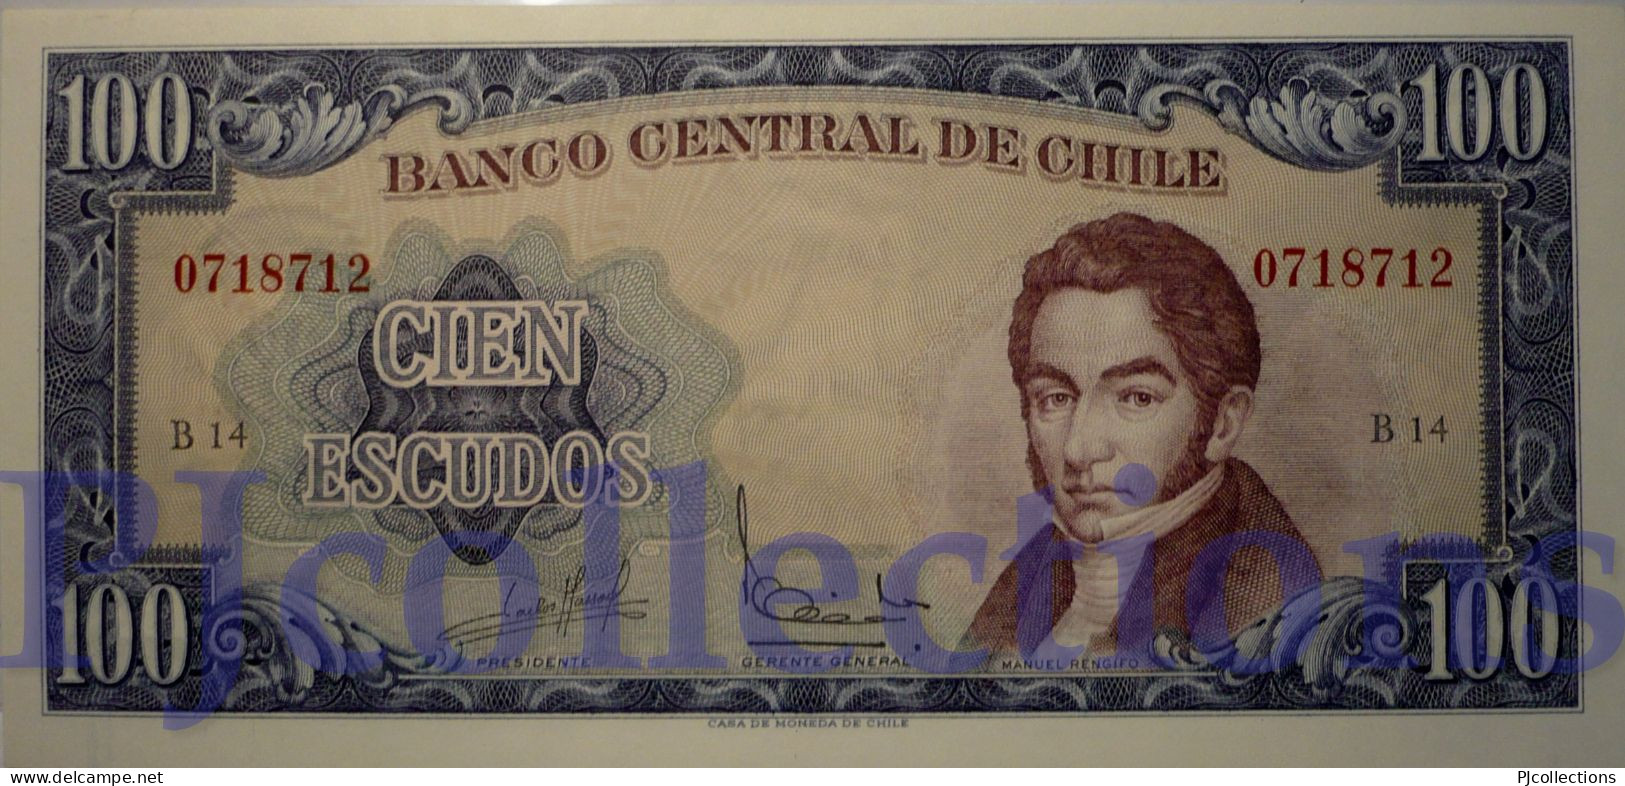 CHILE 100 PESOS 1962/75 PICK 141a UNC SERIE "B" SIG. MASSAD - IBANEZ - Chile